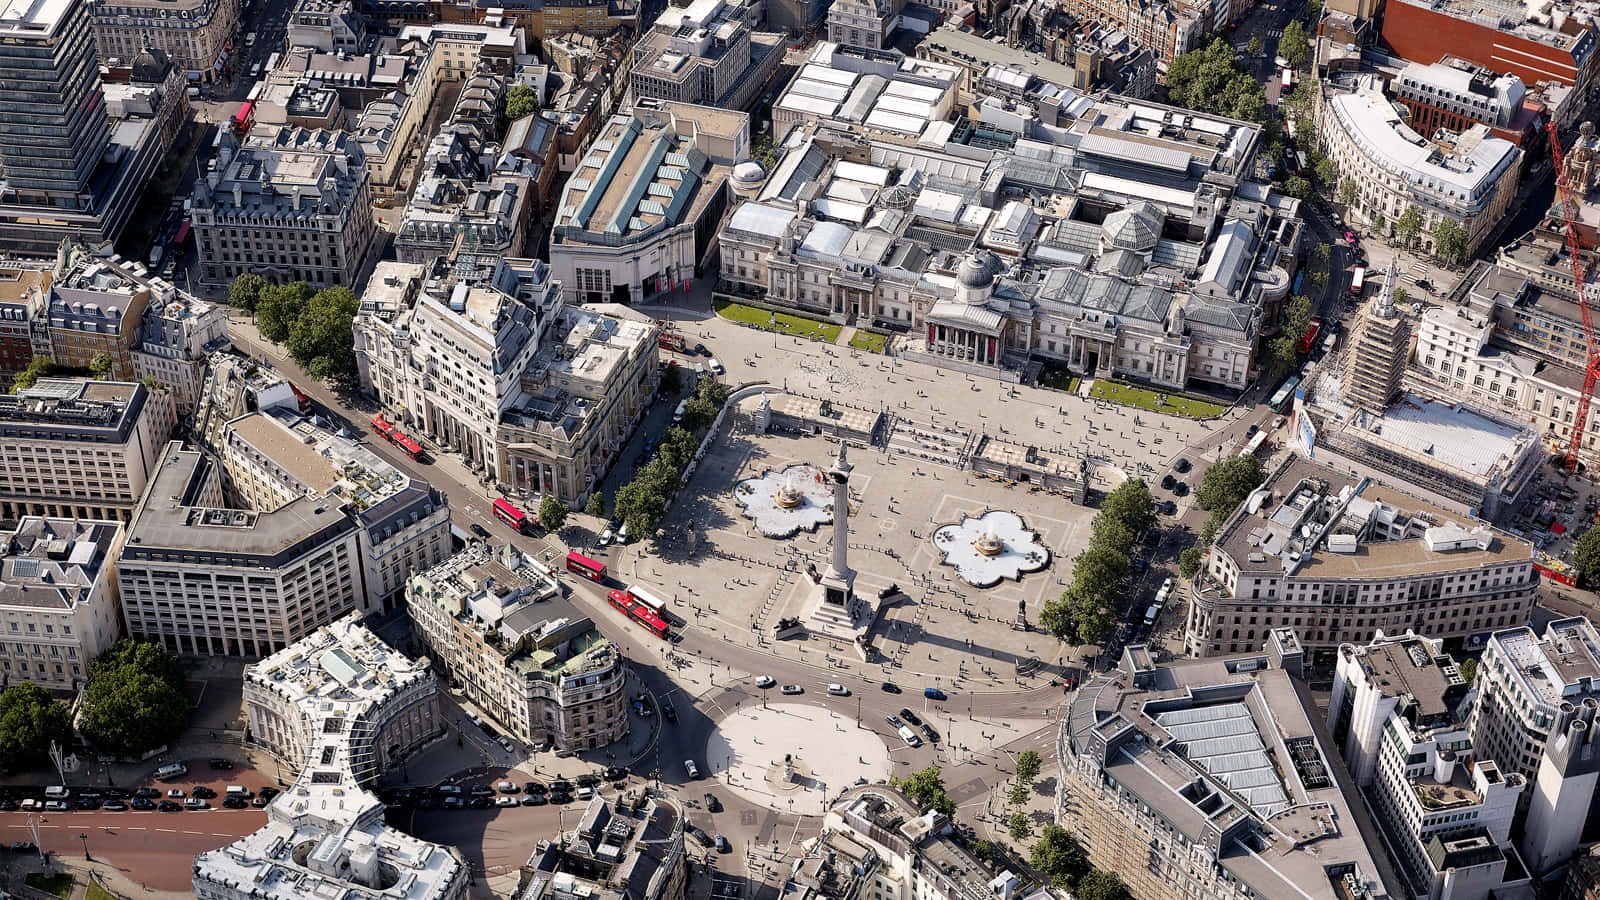 Trafalgar Square Aerial View Picture